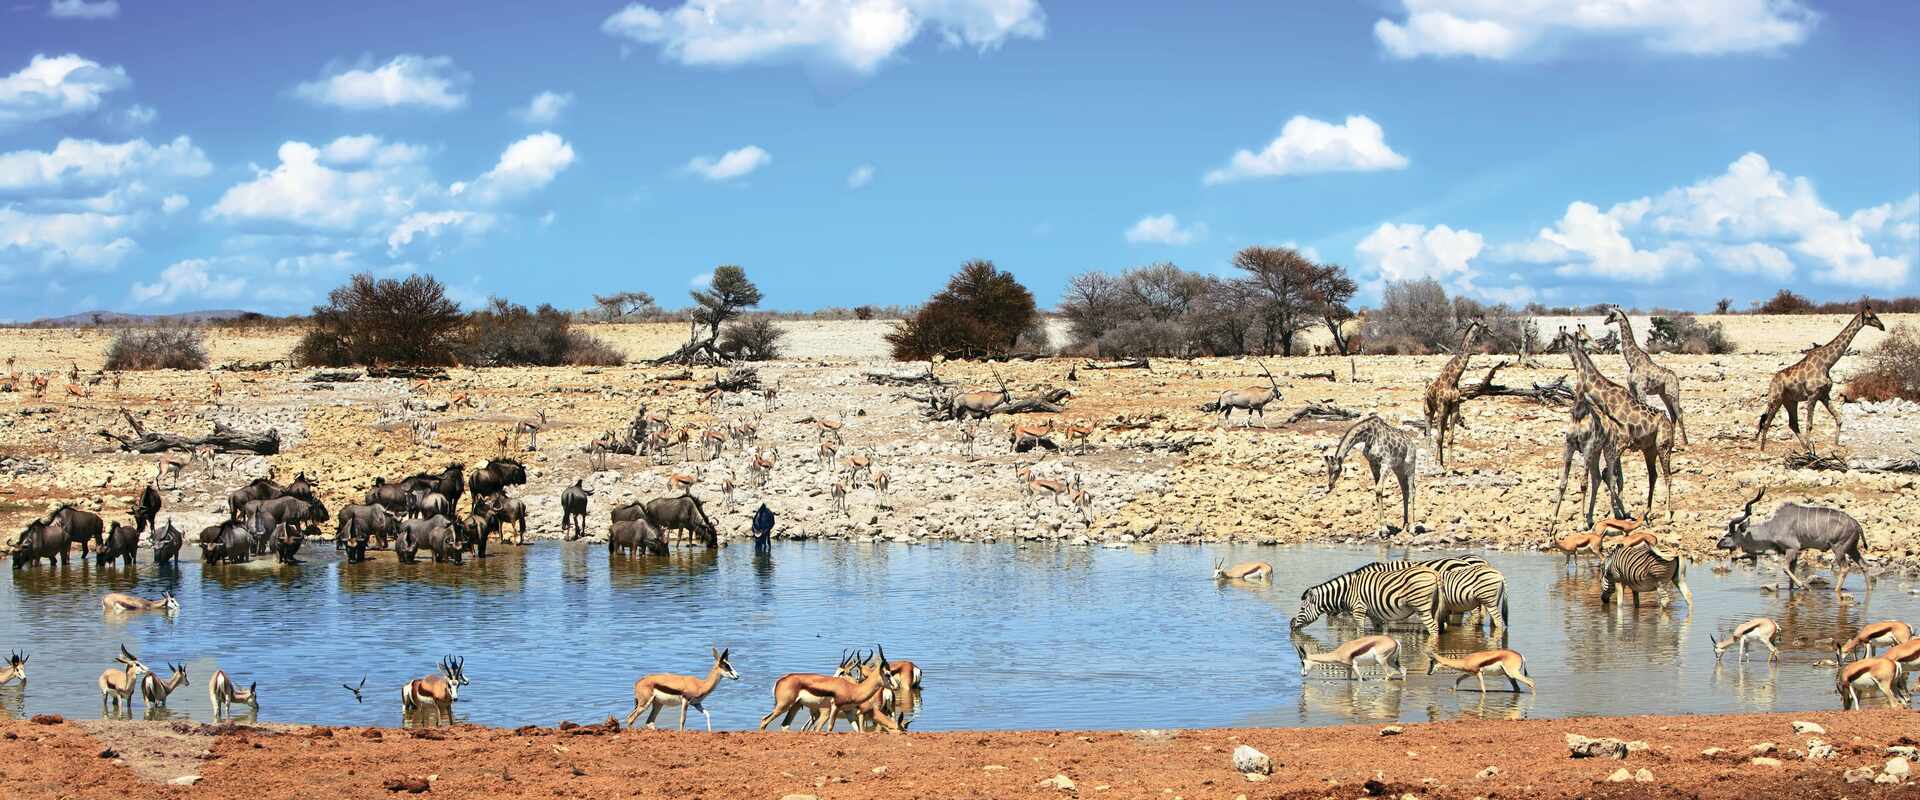 View of Etosha National Park waterhole, Namibia